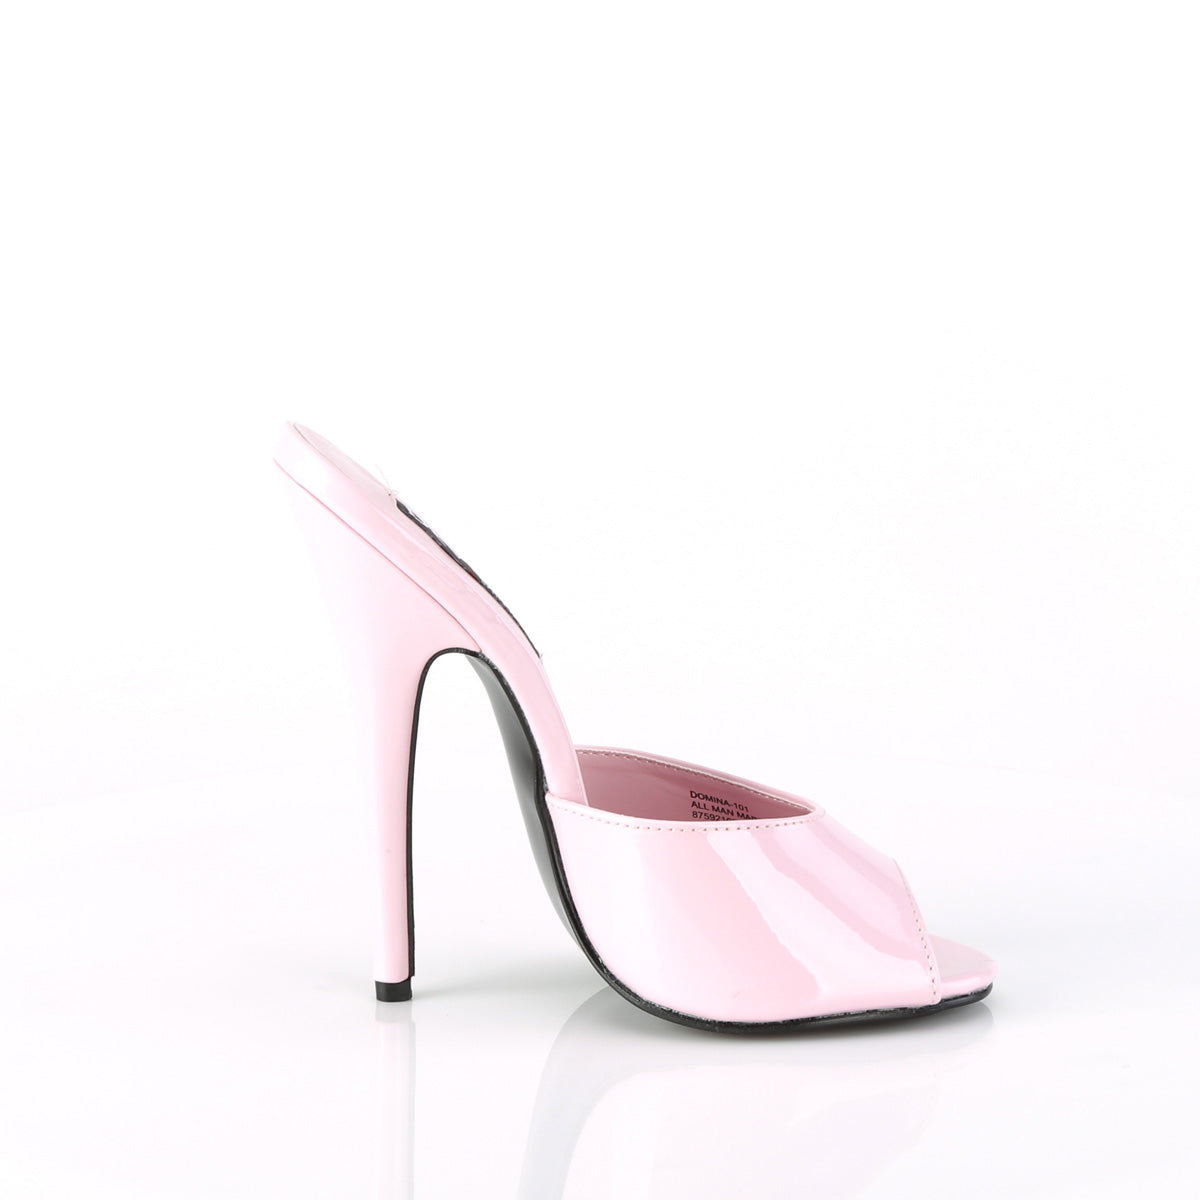 DOMINA-101 Devious Heels B Pink Patent Single Soles [Fetish Heels]